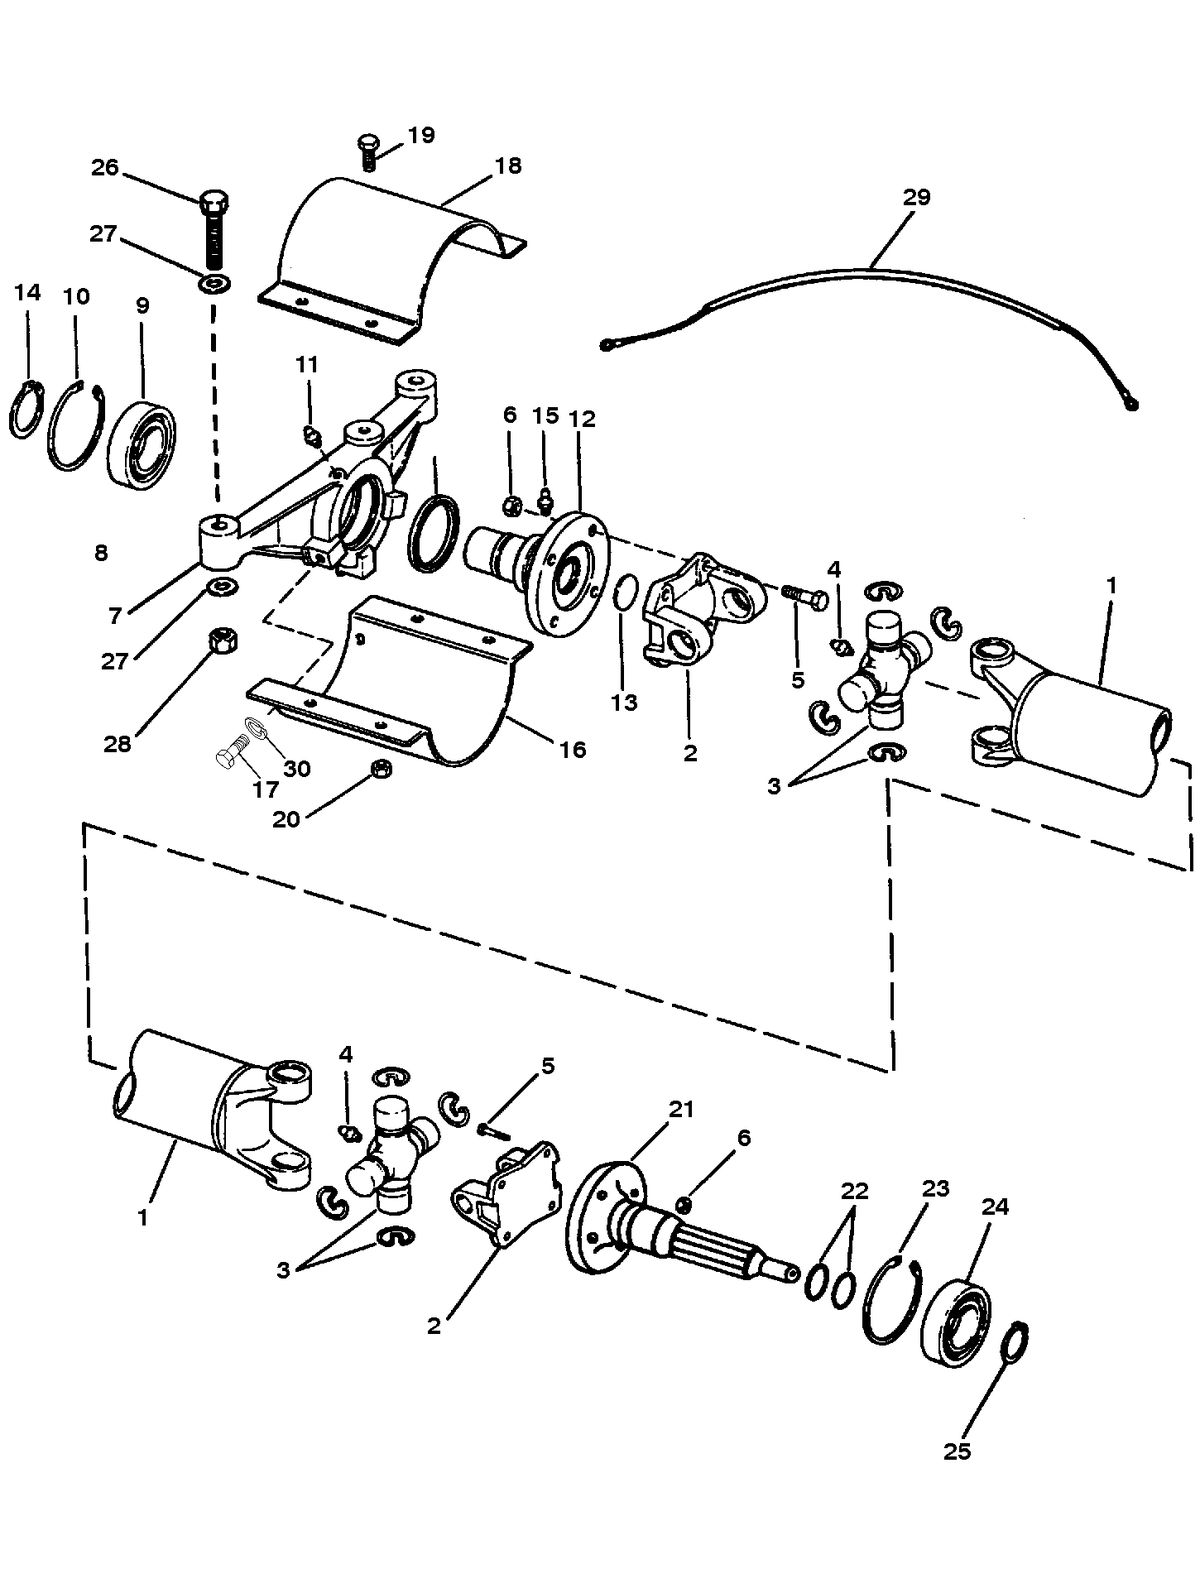 RACE STERNDRIVE 525 H.P. ENGINE DRIVESHAFT EXTENSION COMPONENTS (BRAVO)